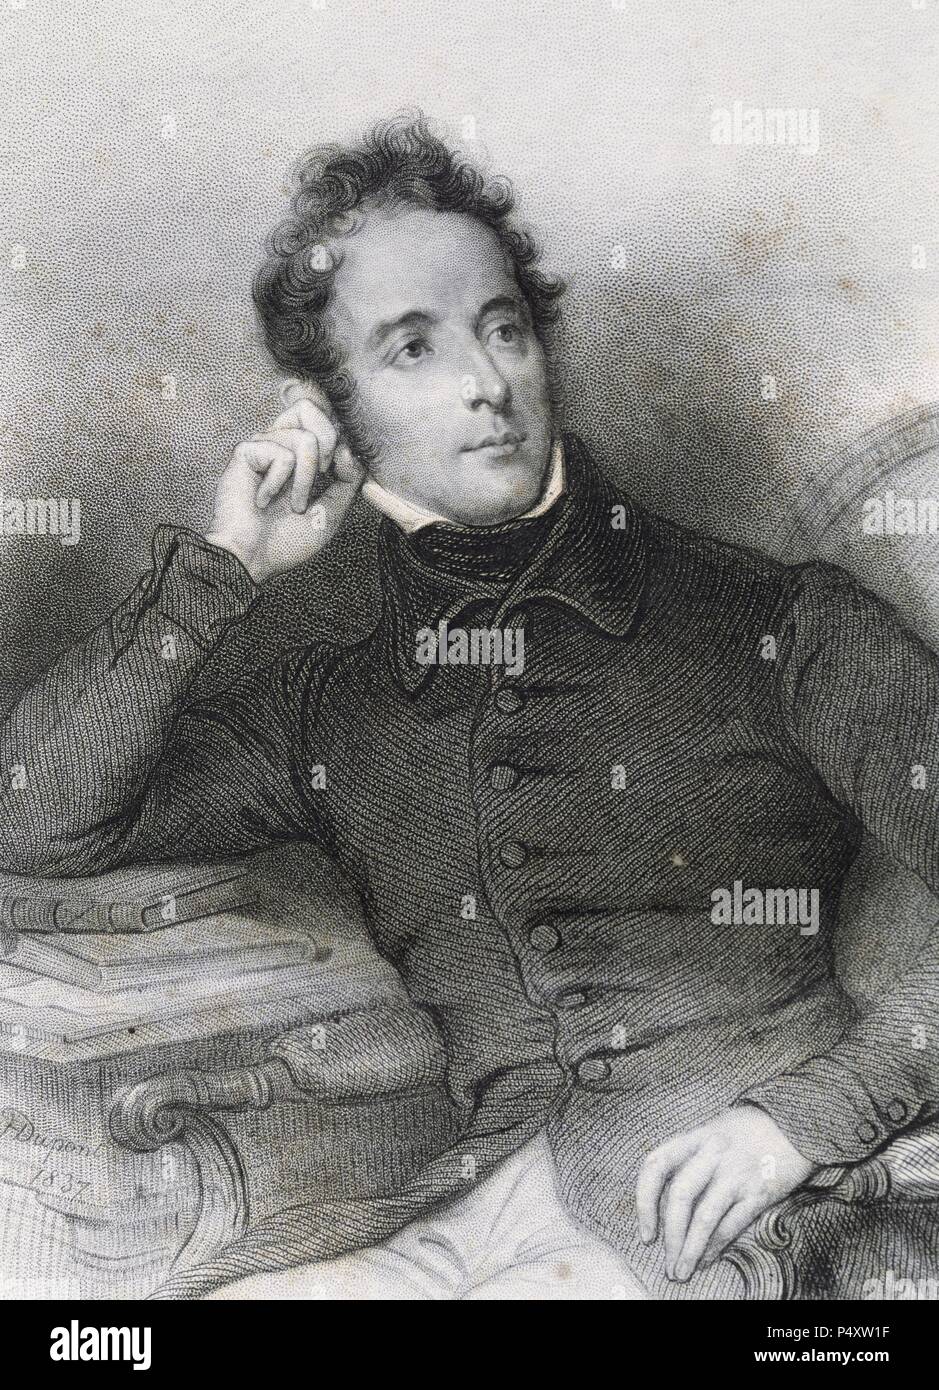 Lamartine, Alphonse de (1790-1869). French romantic writer and politician. Engraving, 1850. Stock Photo